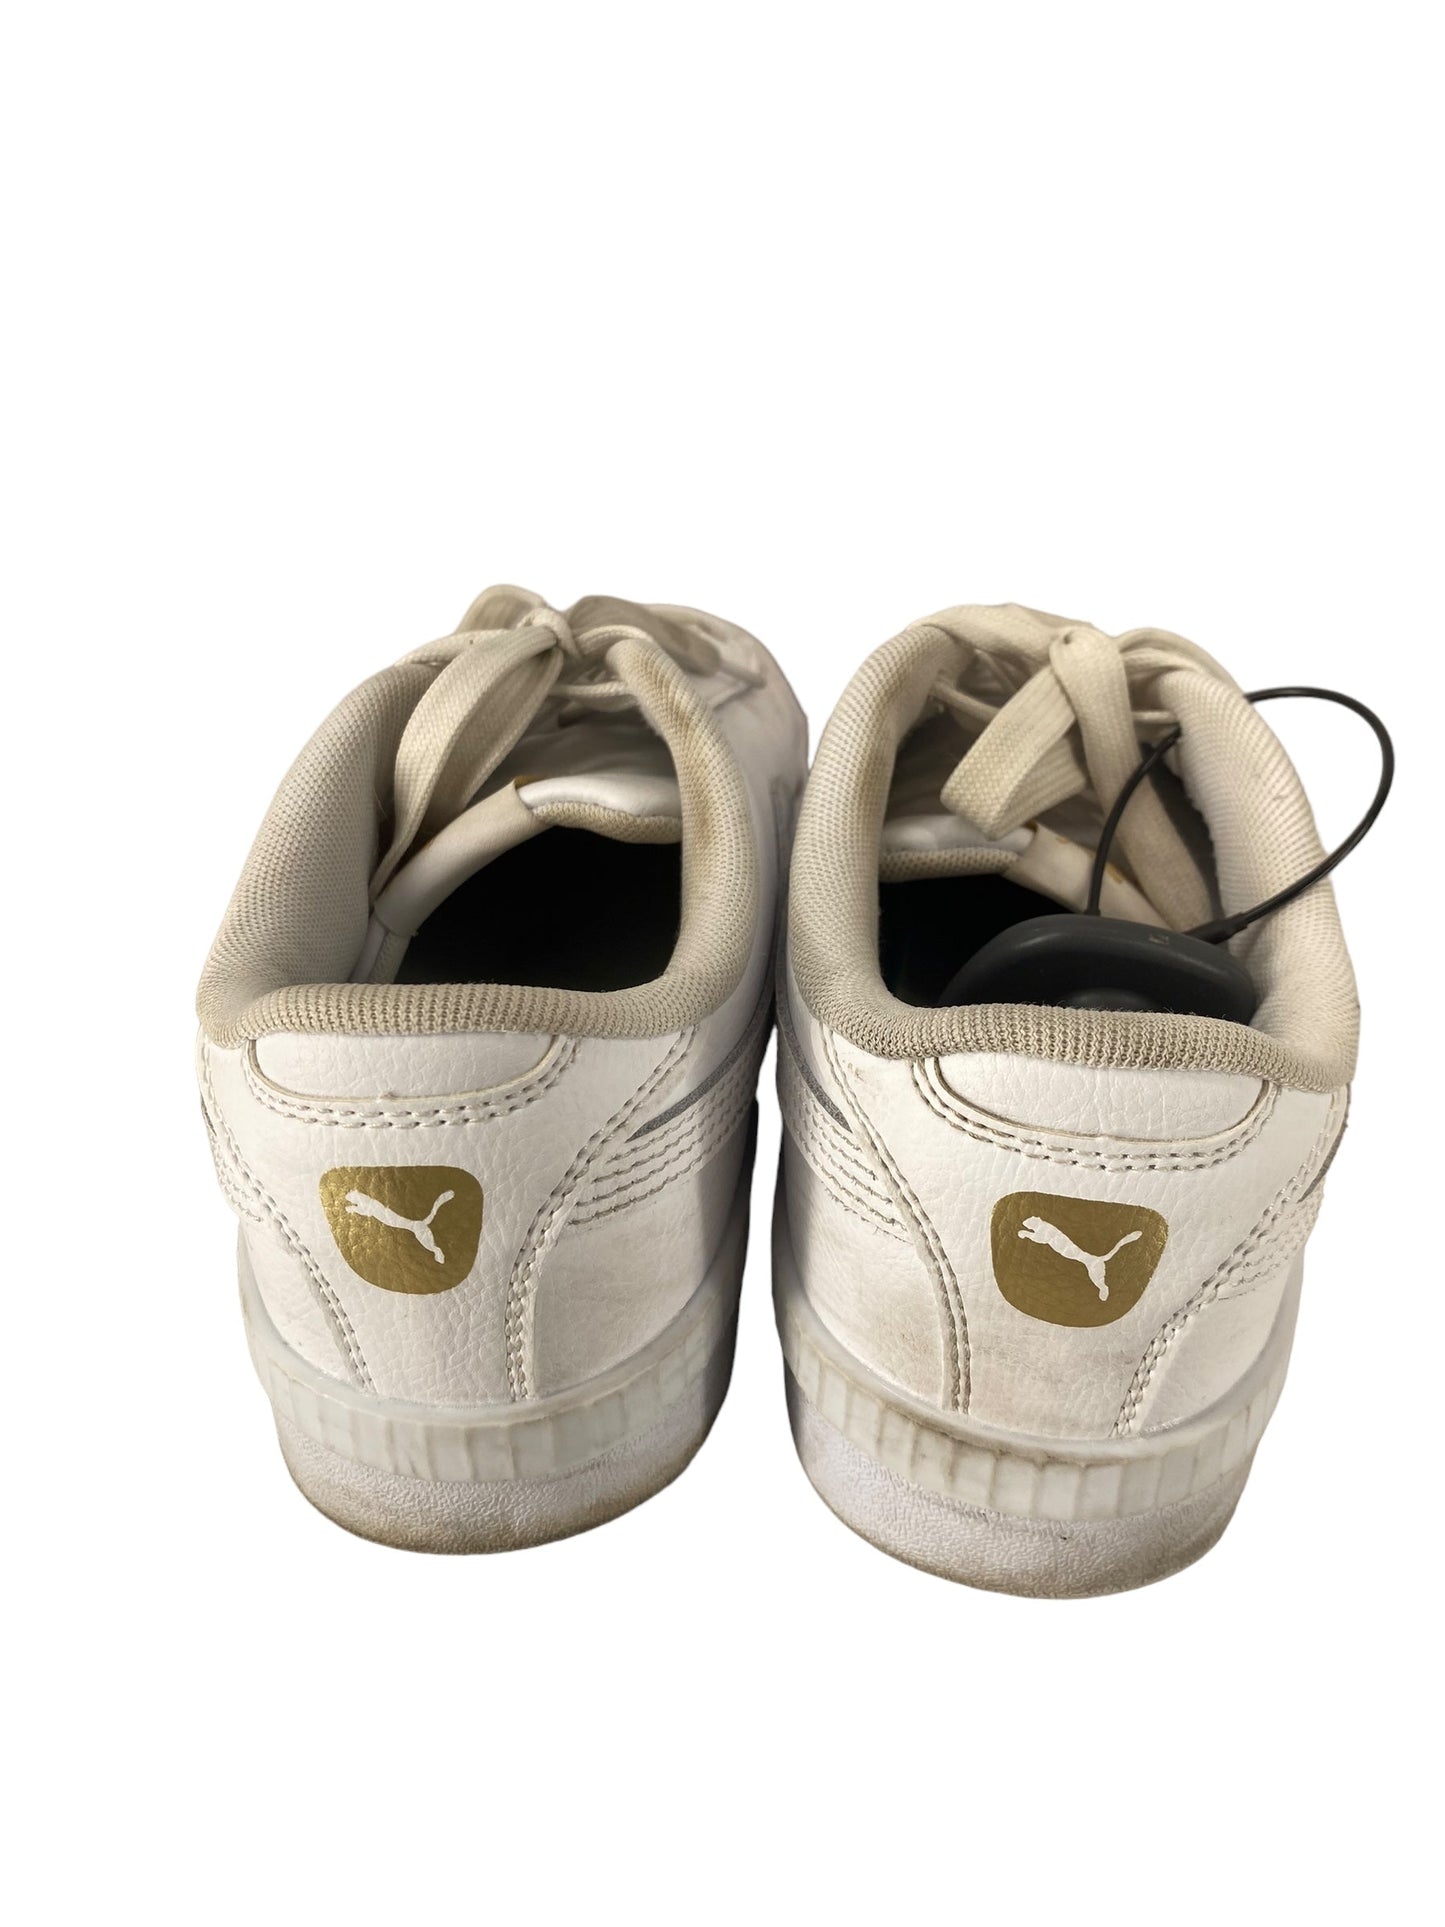 White Shoes Athletic Puma, Size 8.5